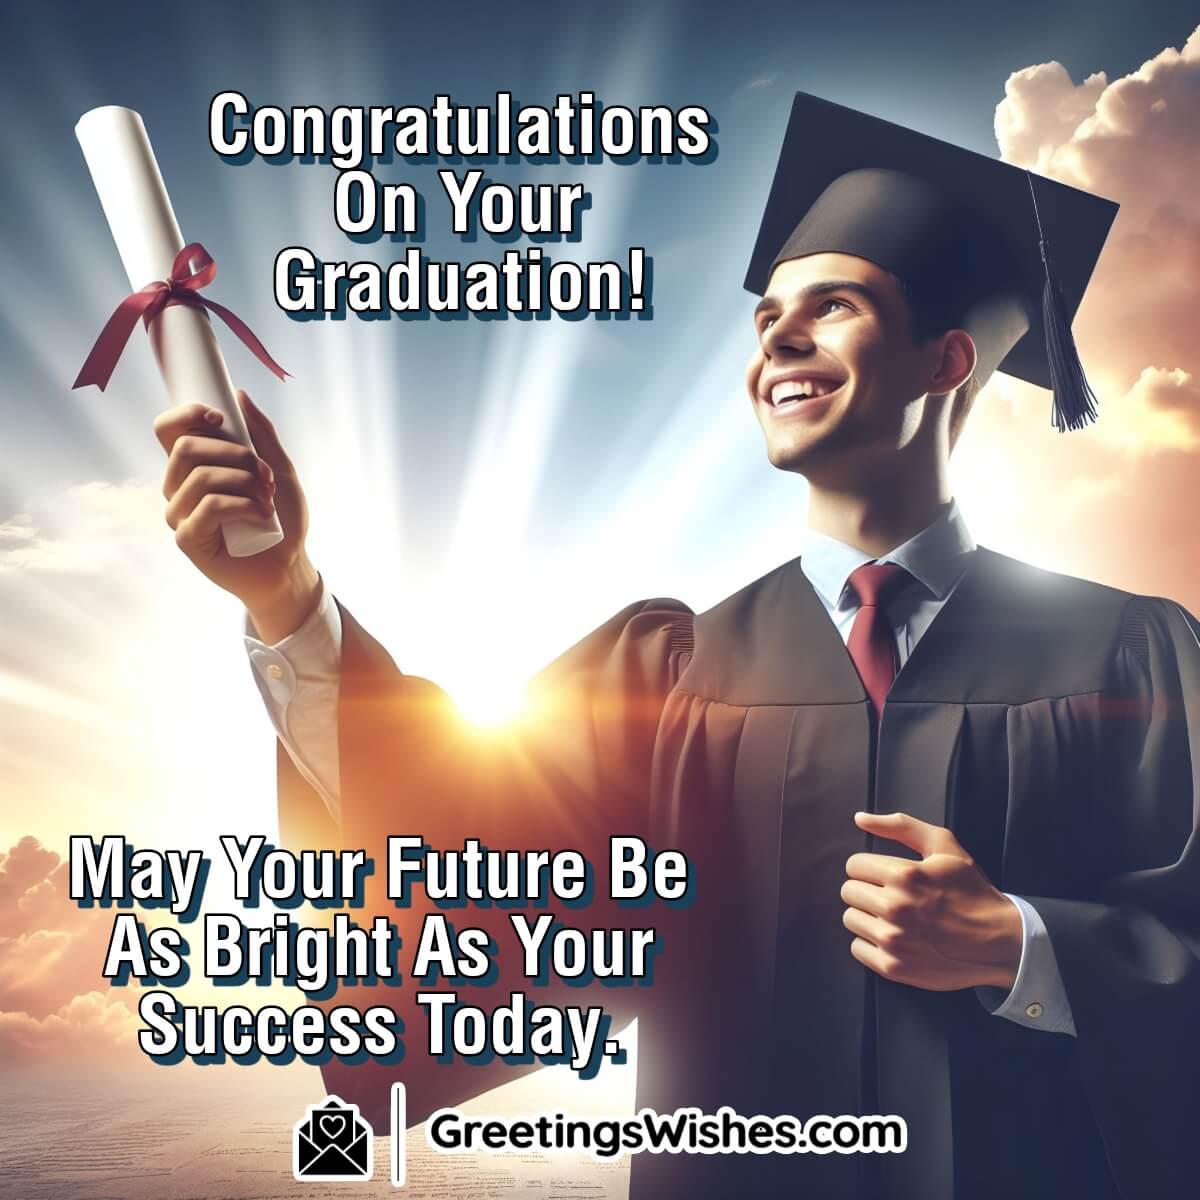 Graduation Glory: Congratulations to Academic Achievement!